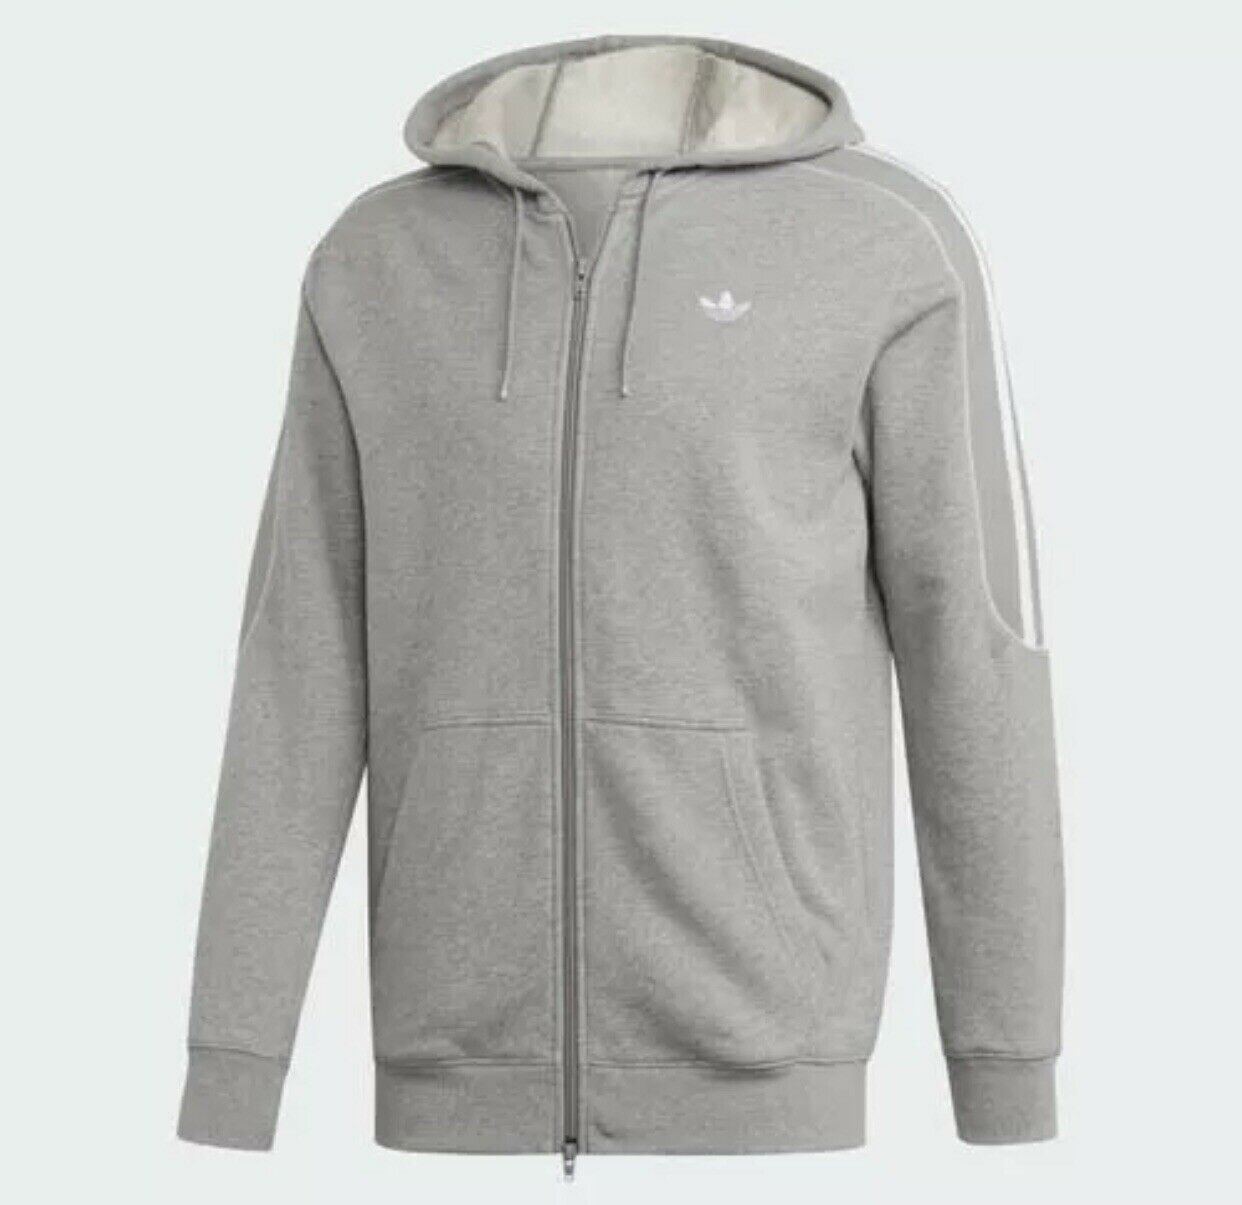 Adidas 3 Foil Hooded Grey Sweatshirt Medium New WIth Tags DU8140 freeshipping - Benson66